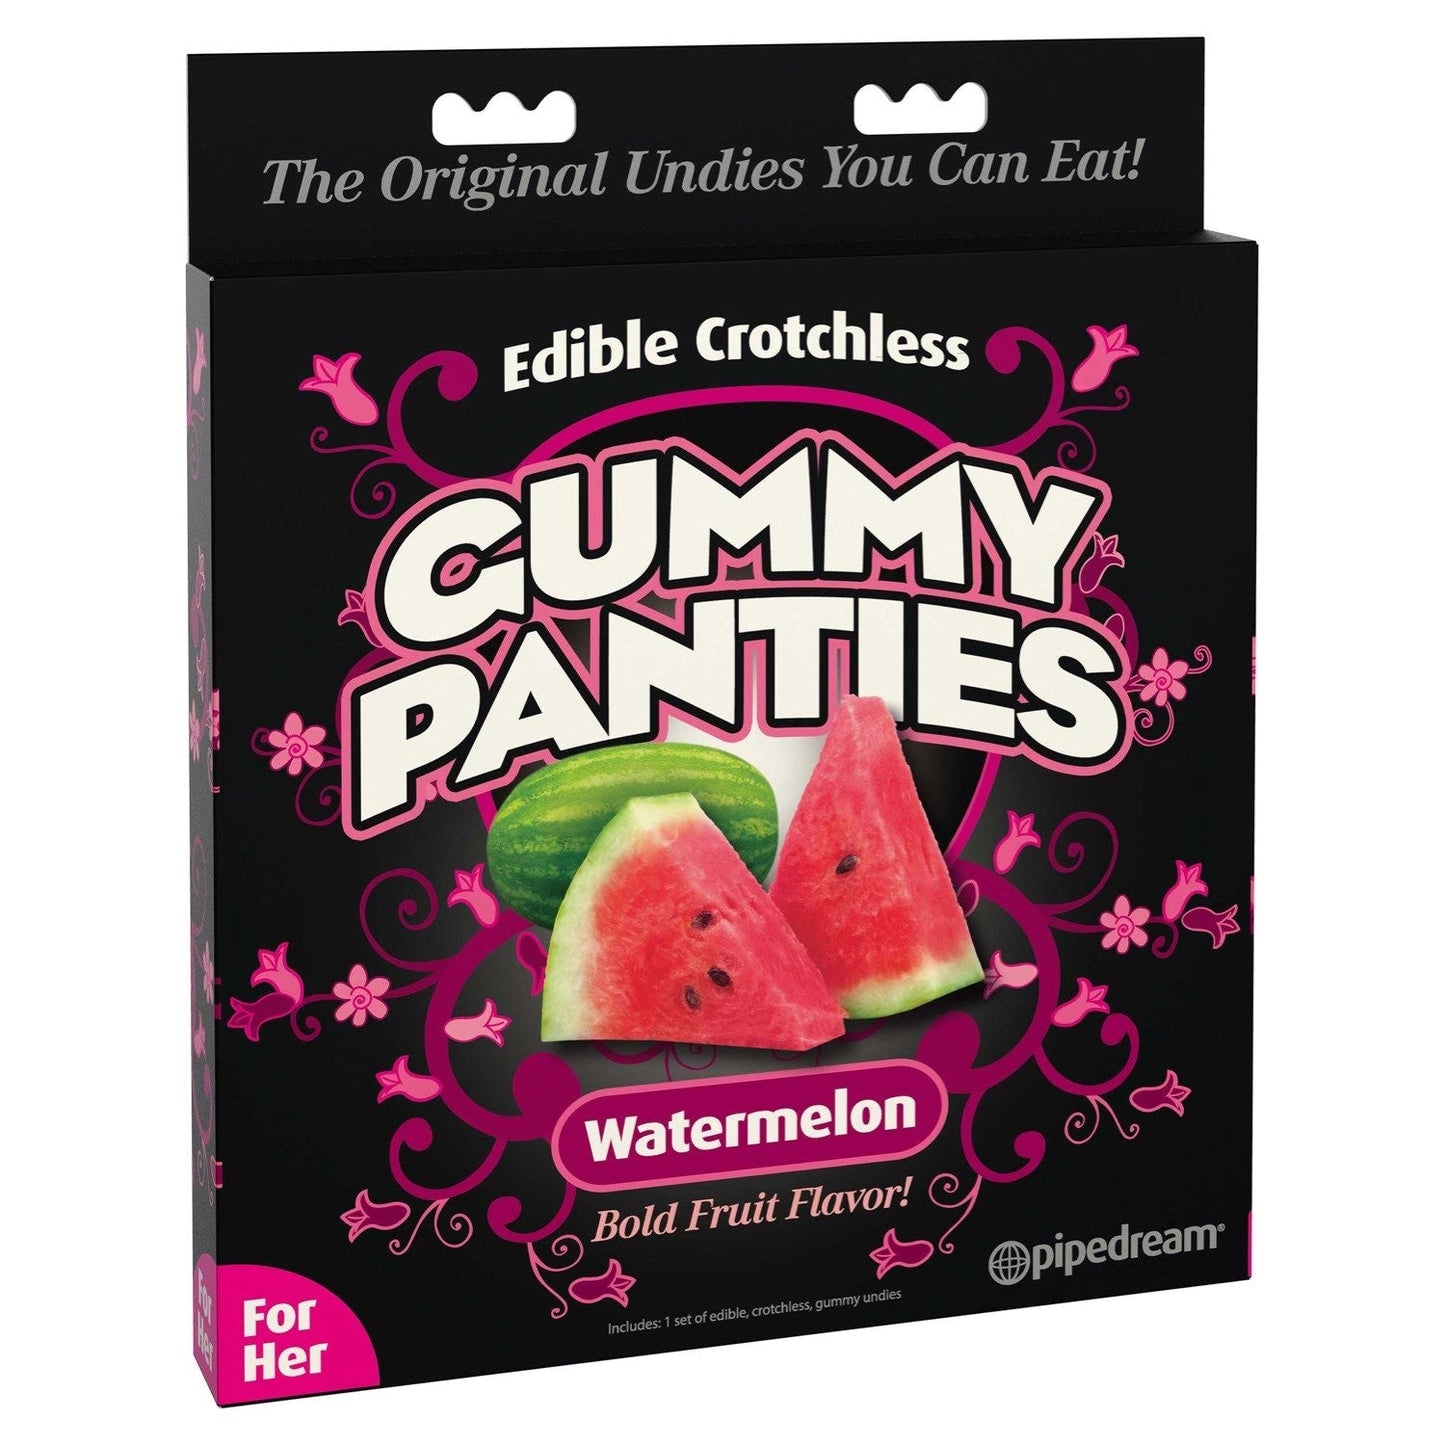 Gummy Panties - Watermelon Flavoured Edible Crotchless Panties